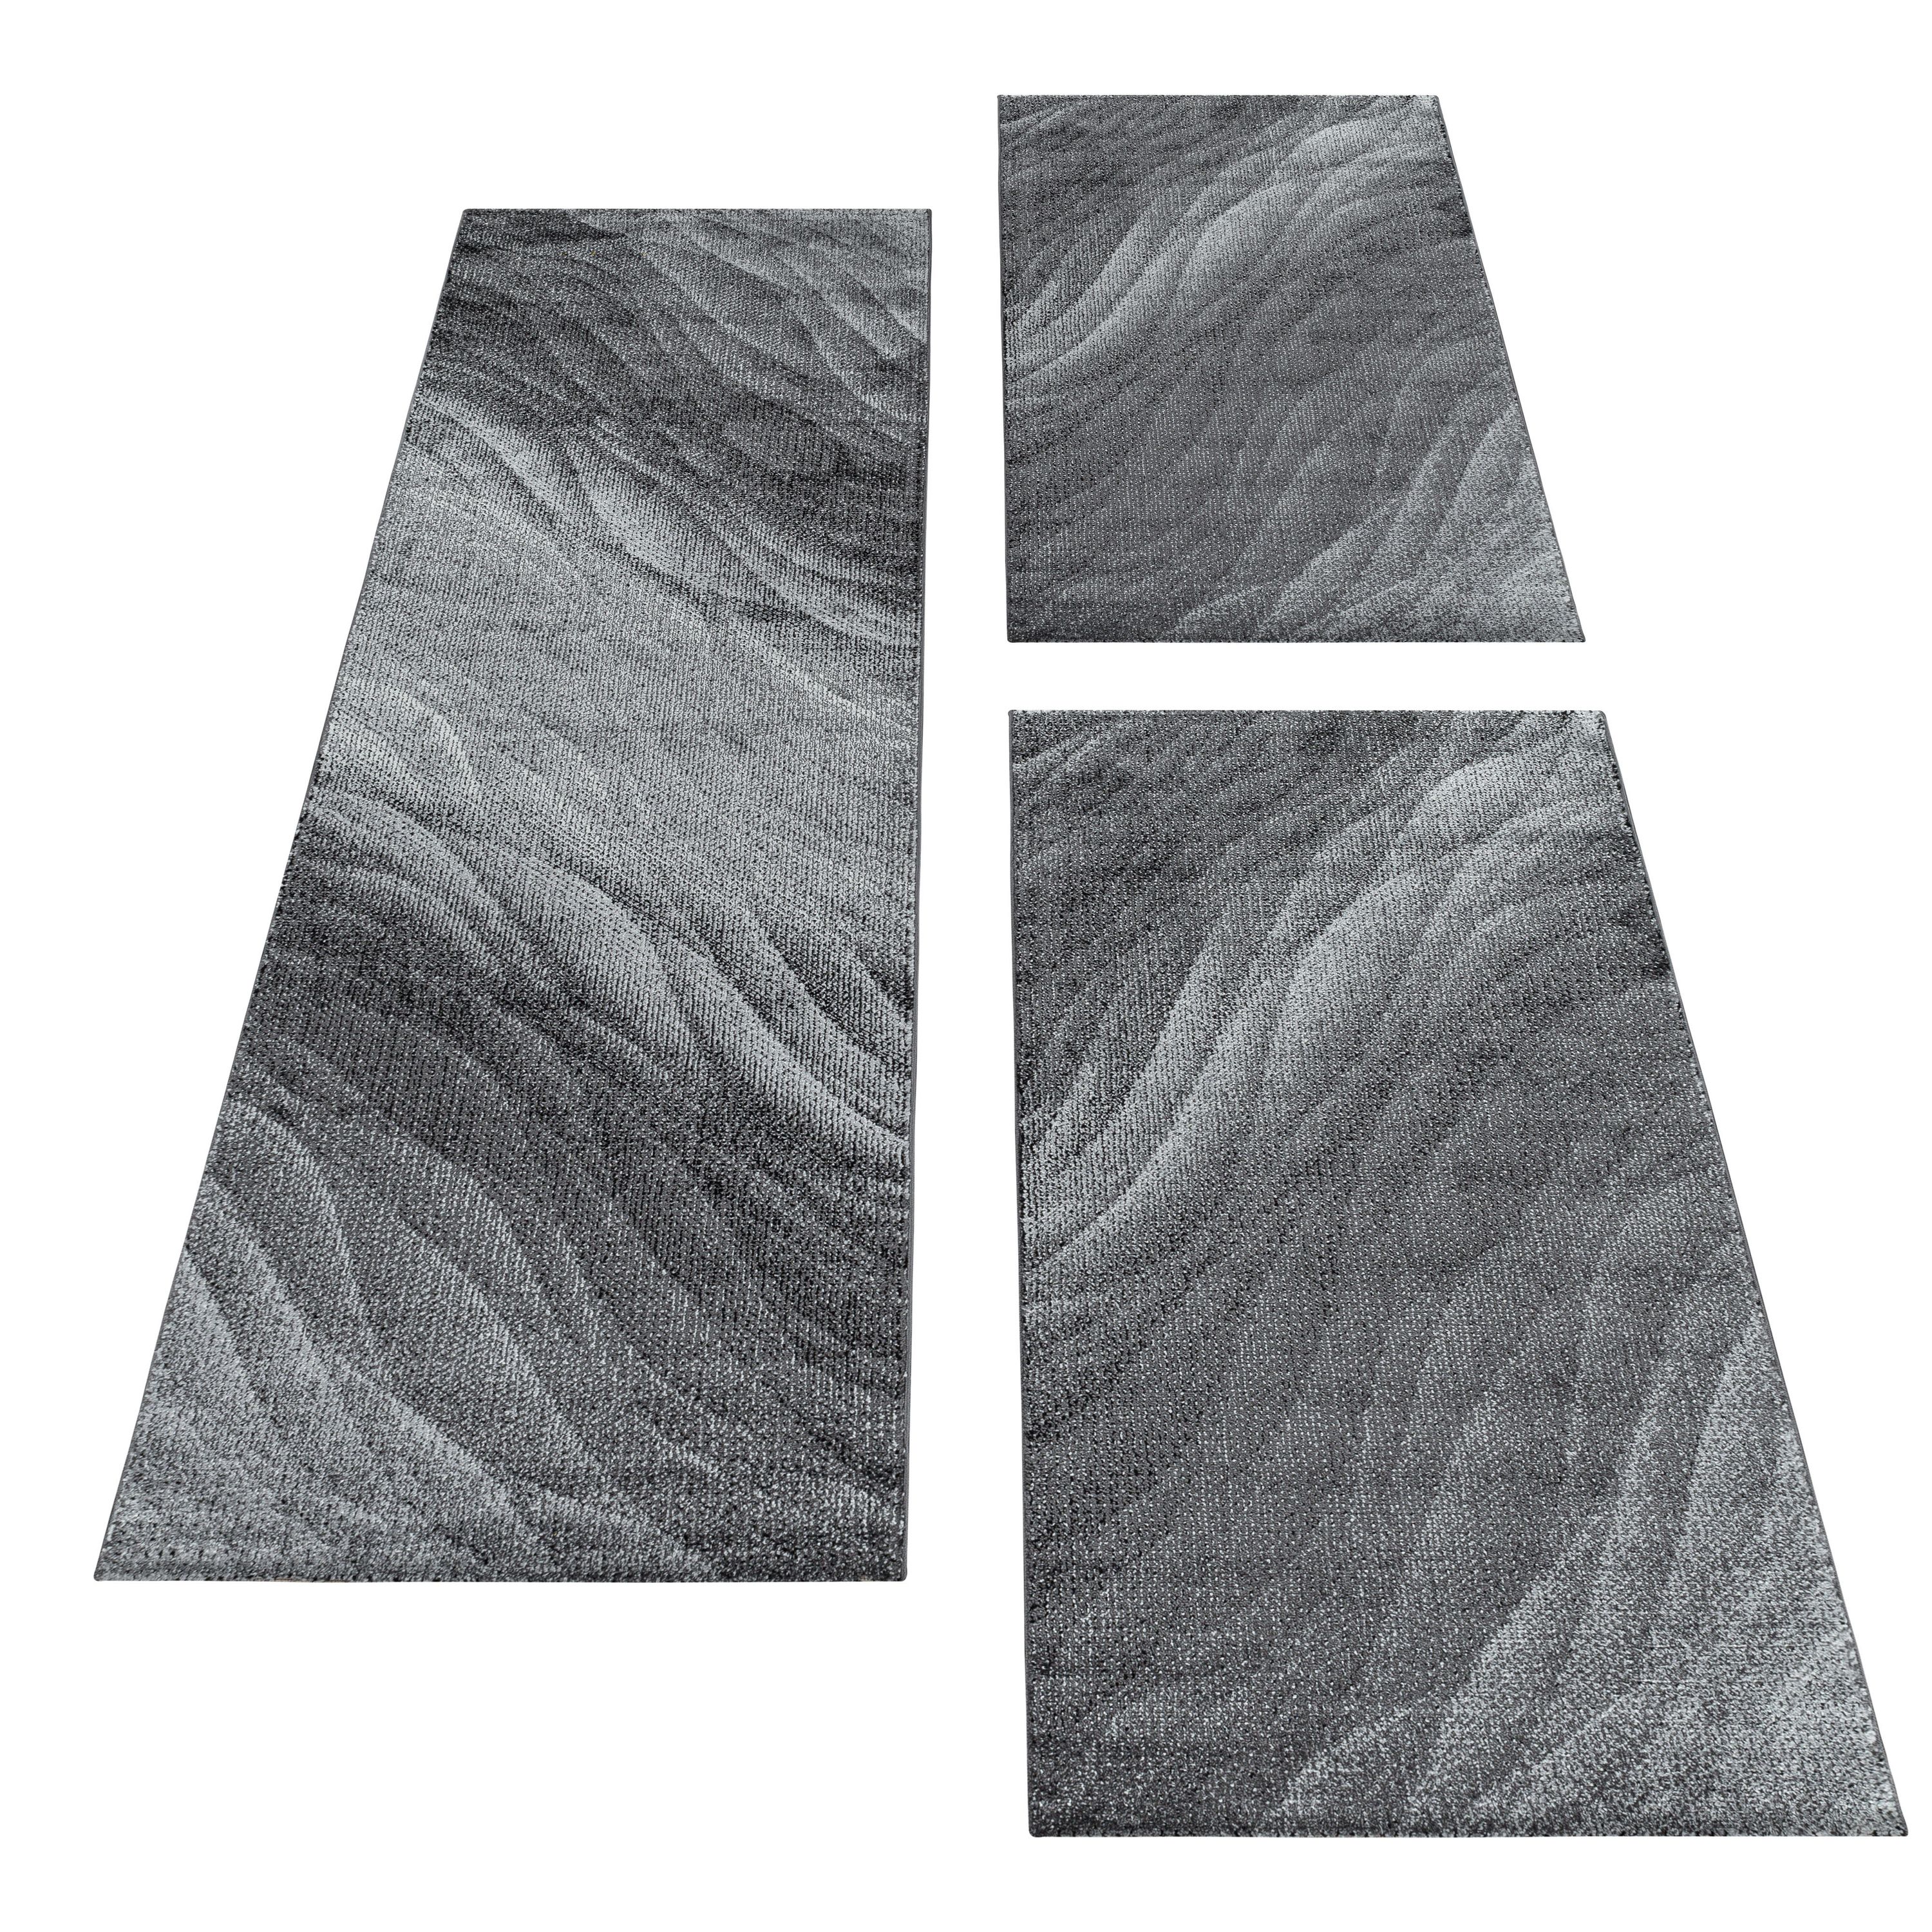 Kurzflor Teppich Bettset Grau Muster Modern Wellen Linien Läuferset 3 Teile Set